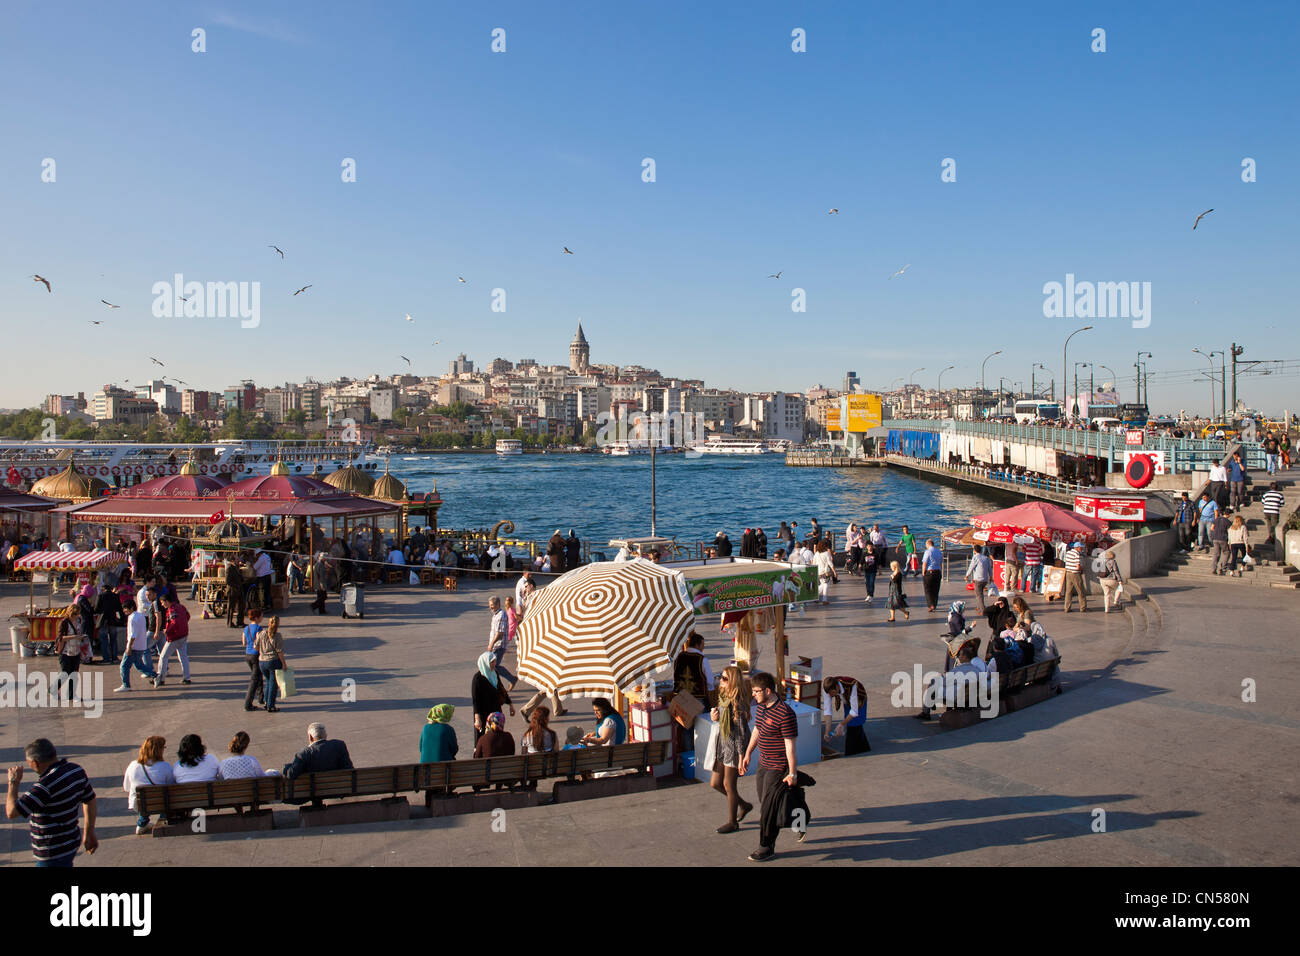 Turkey, Istanbul, Eminönü district, the port of Eminönü along the strait of the Golden Horn Stock Photo